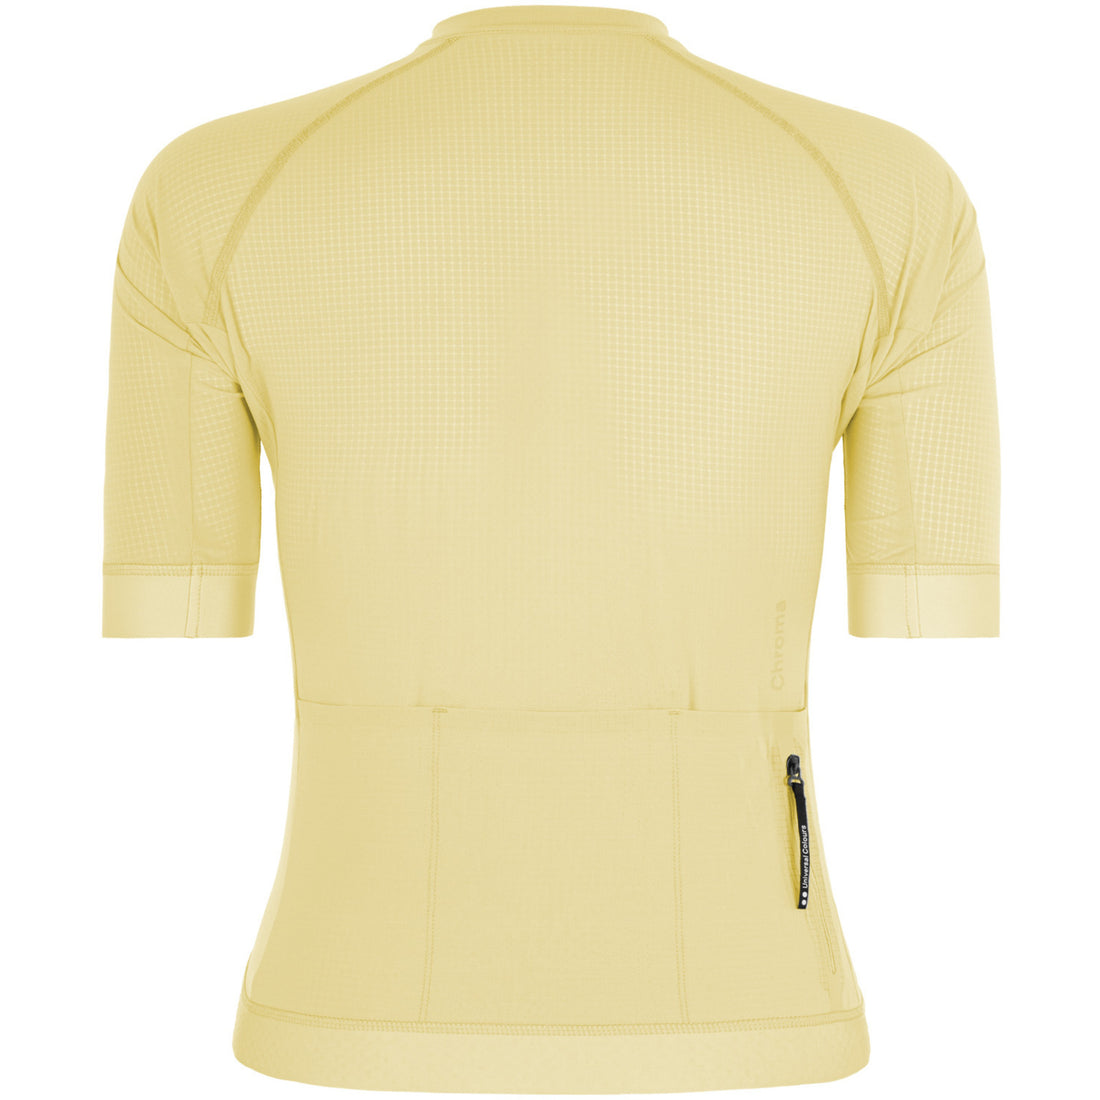 Universal Colours Chroma Women's Short Sleeve Jersey Radtrikot Lemon Yellow